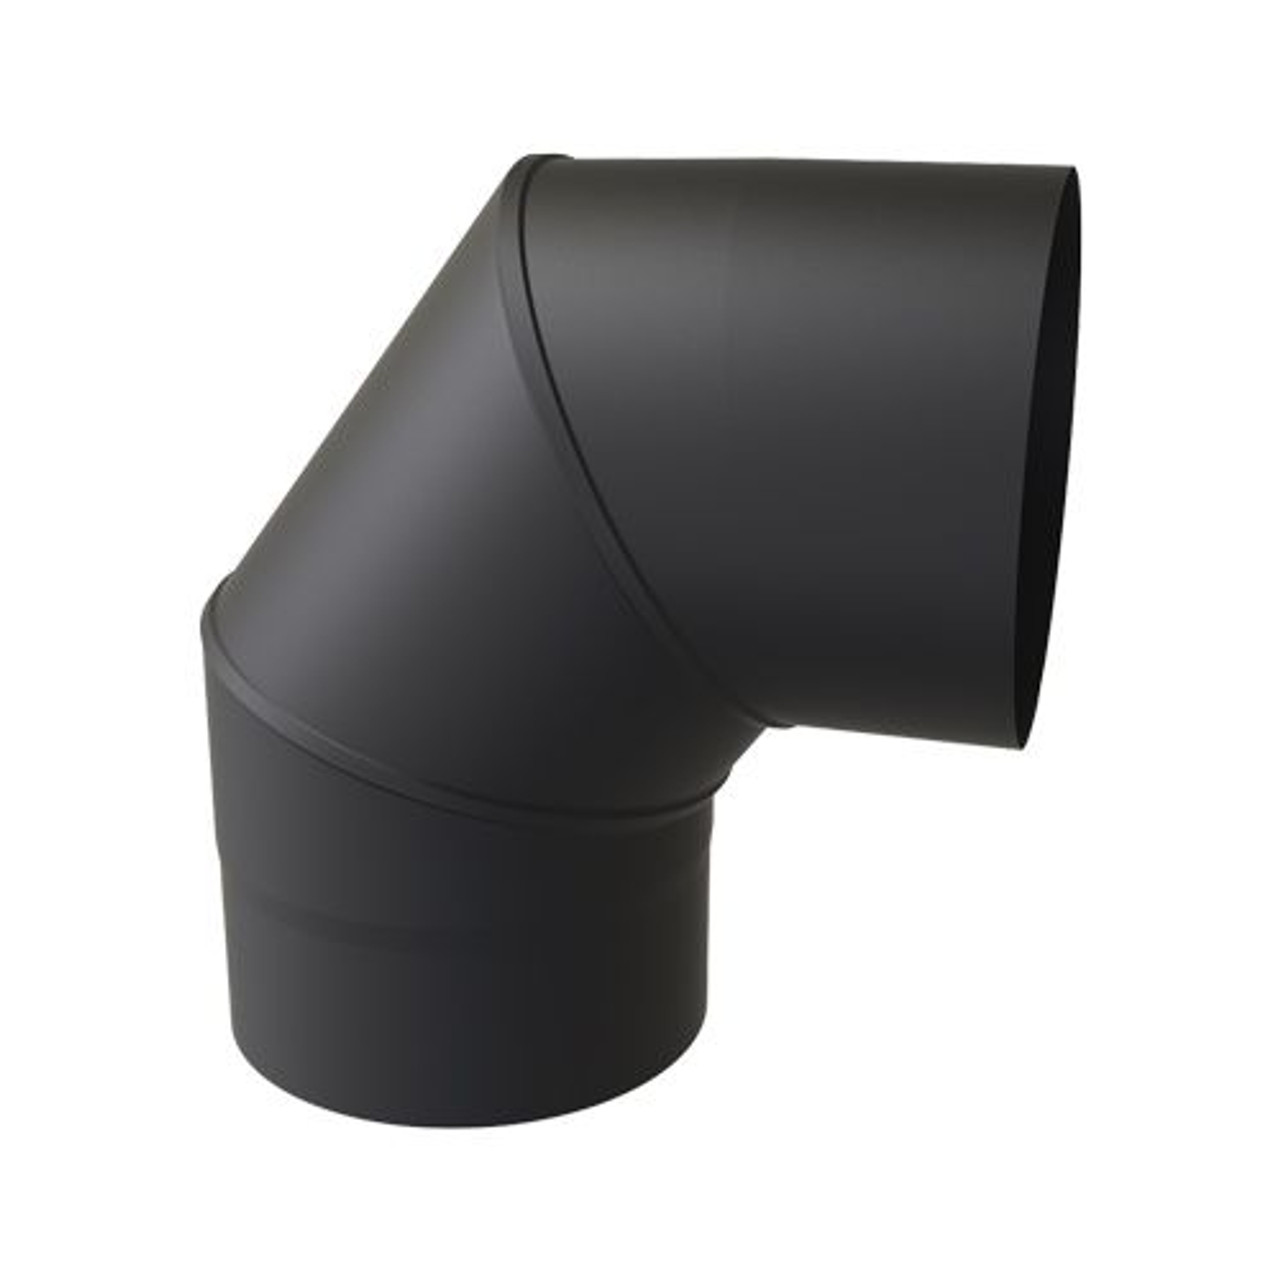 Vlek Wonderbaarlijk Kust Kachelbuis bocht 90° Ø 125mm EW RVS zwart | Heating World